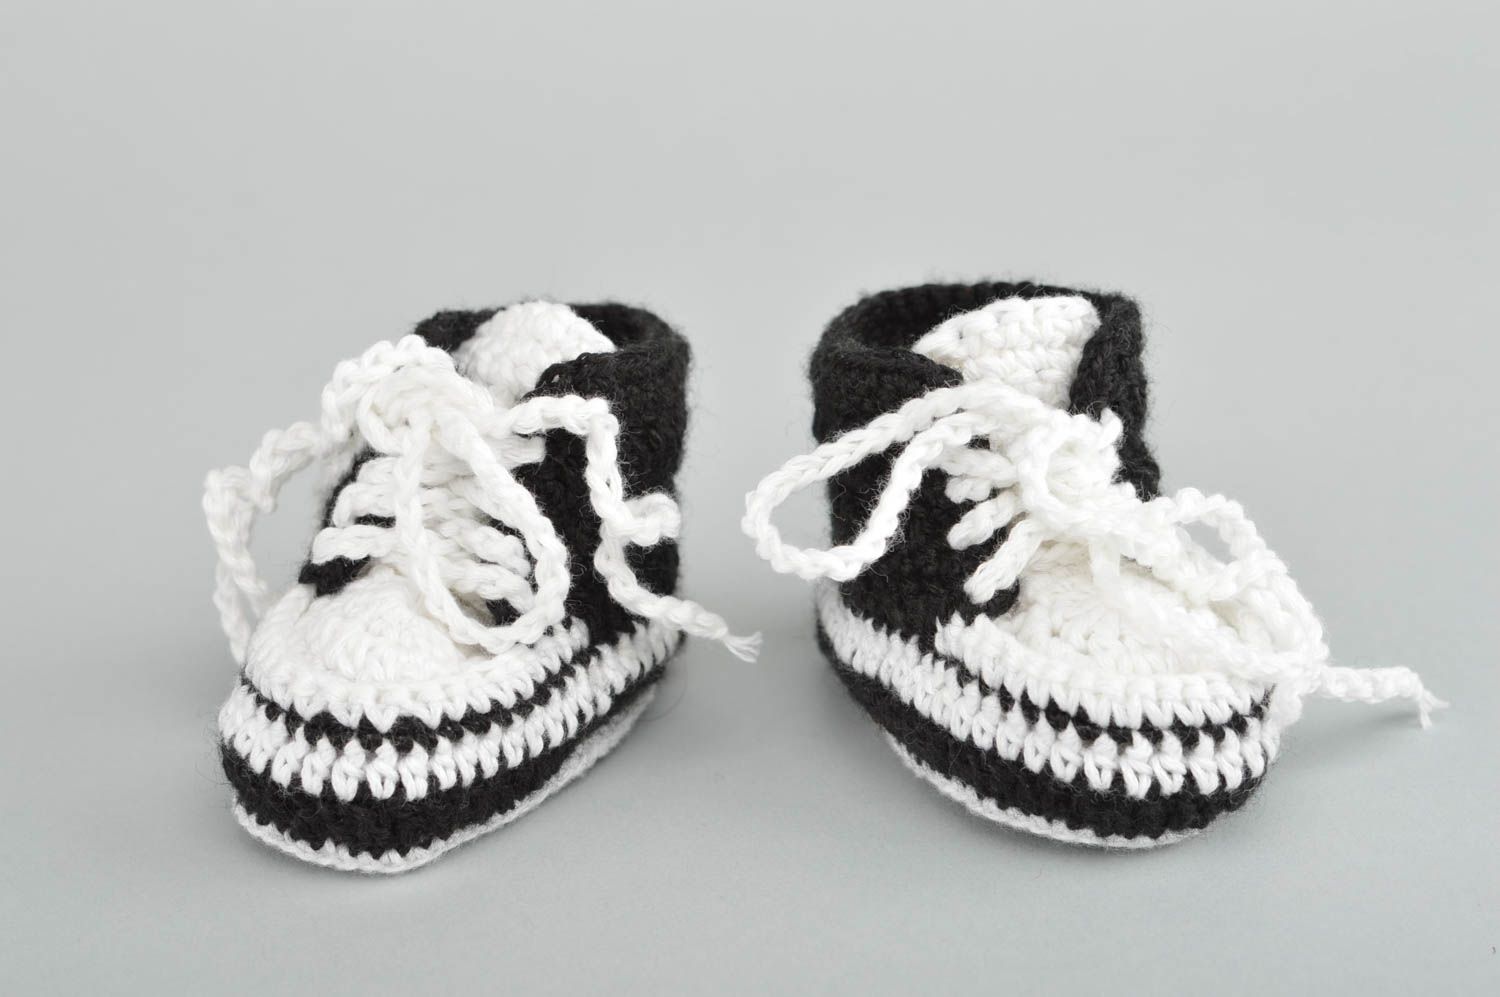 Beautiful handmade crochet baby booties warm baby booties cute baby outfits photo 2